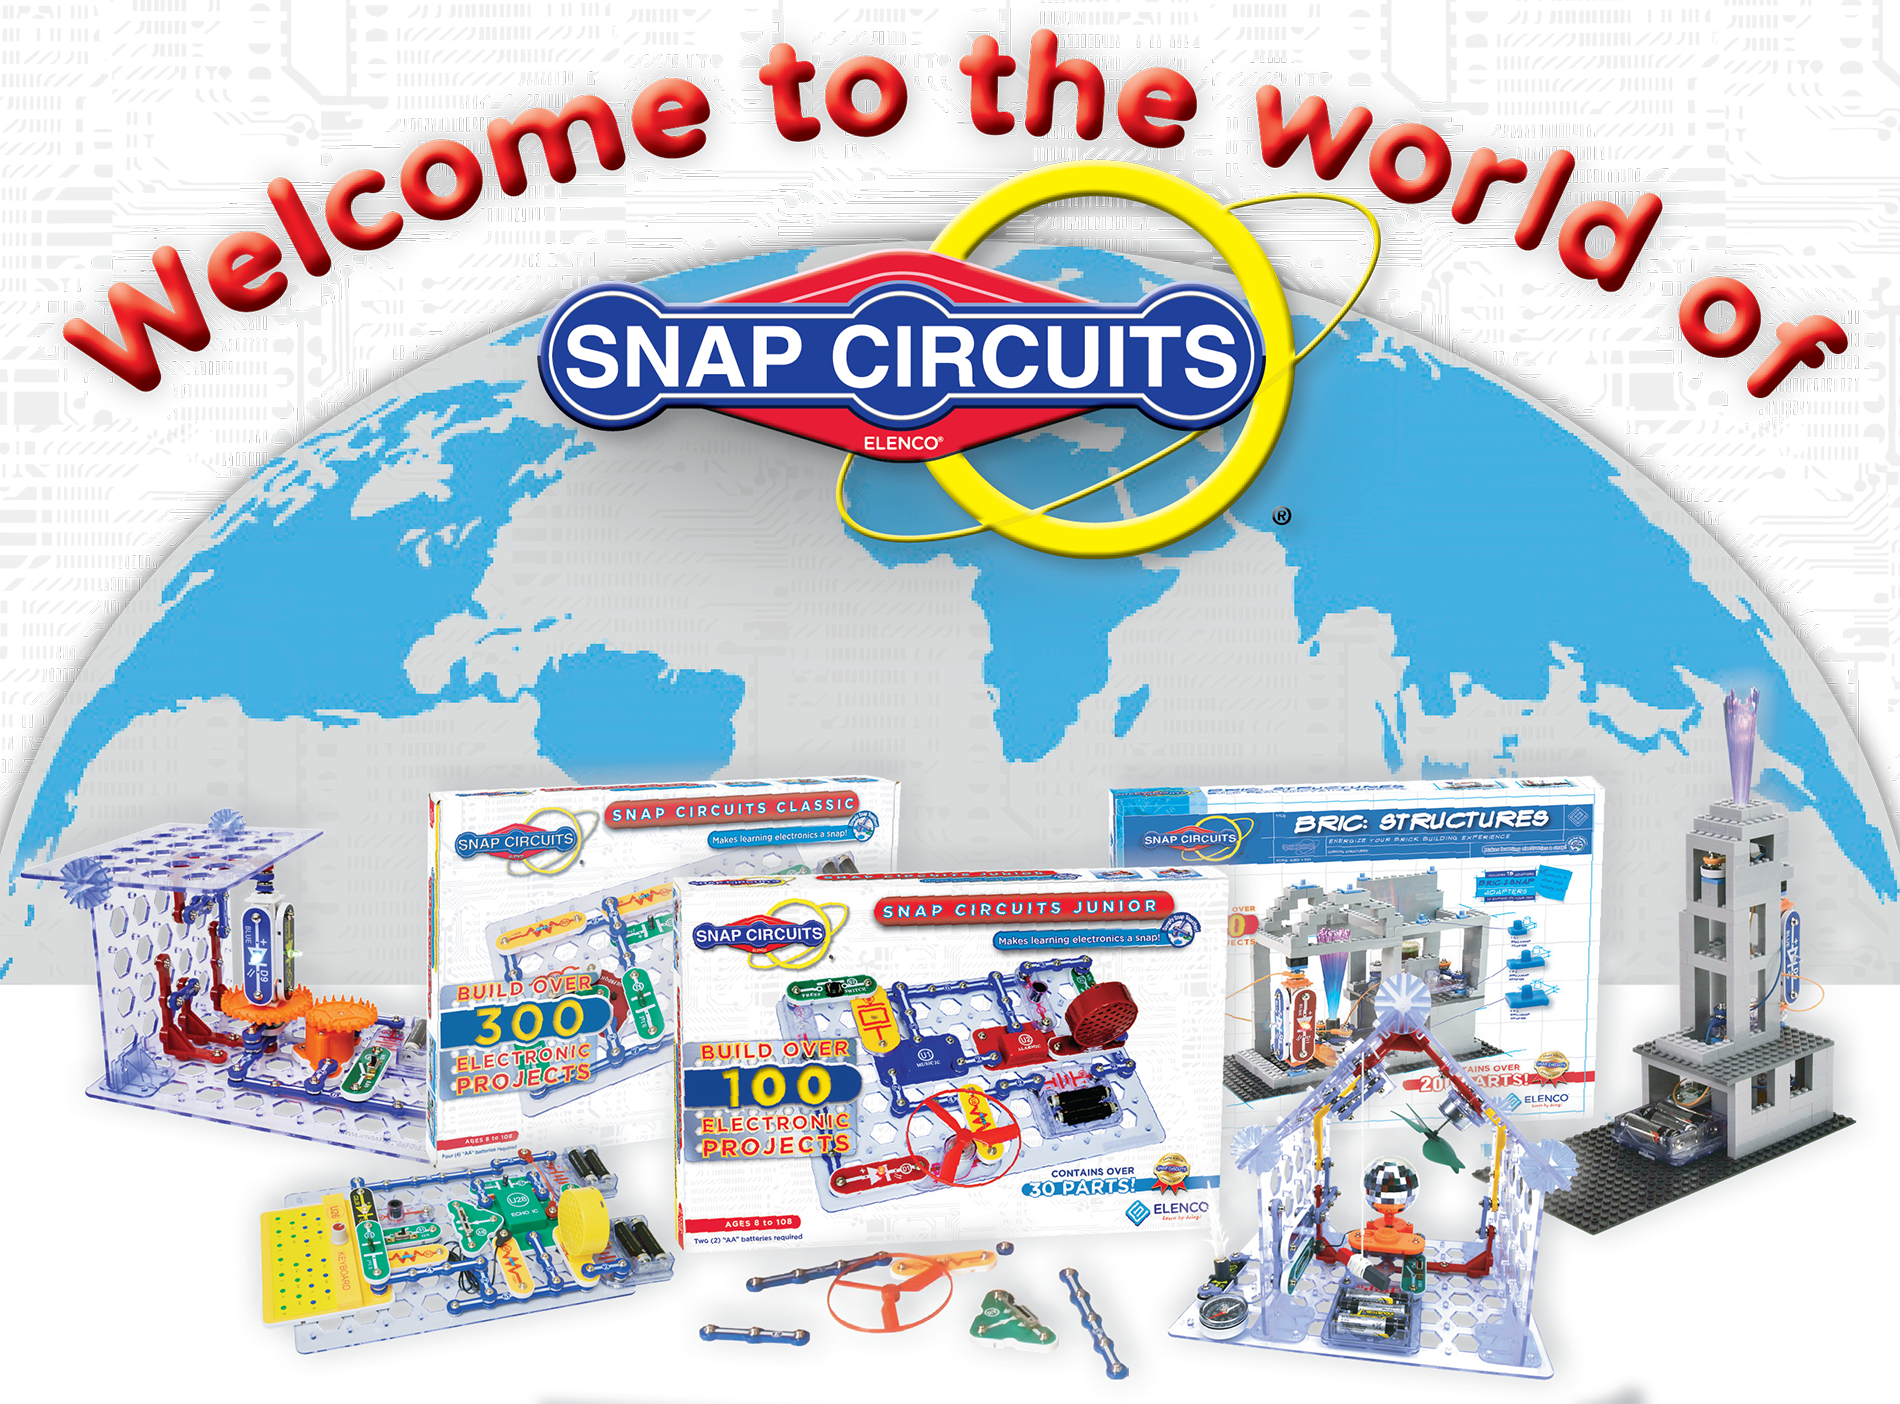 stem snap circuits